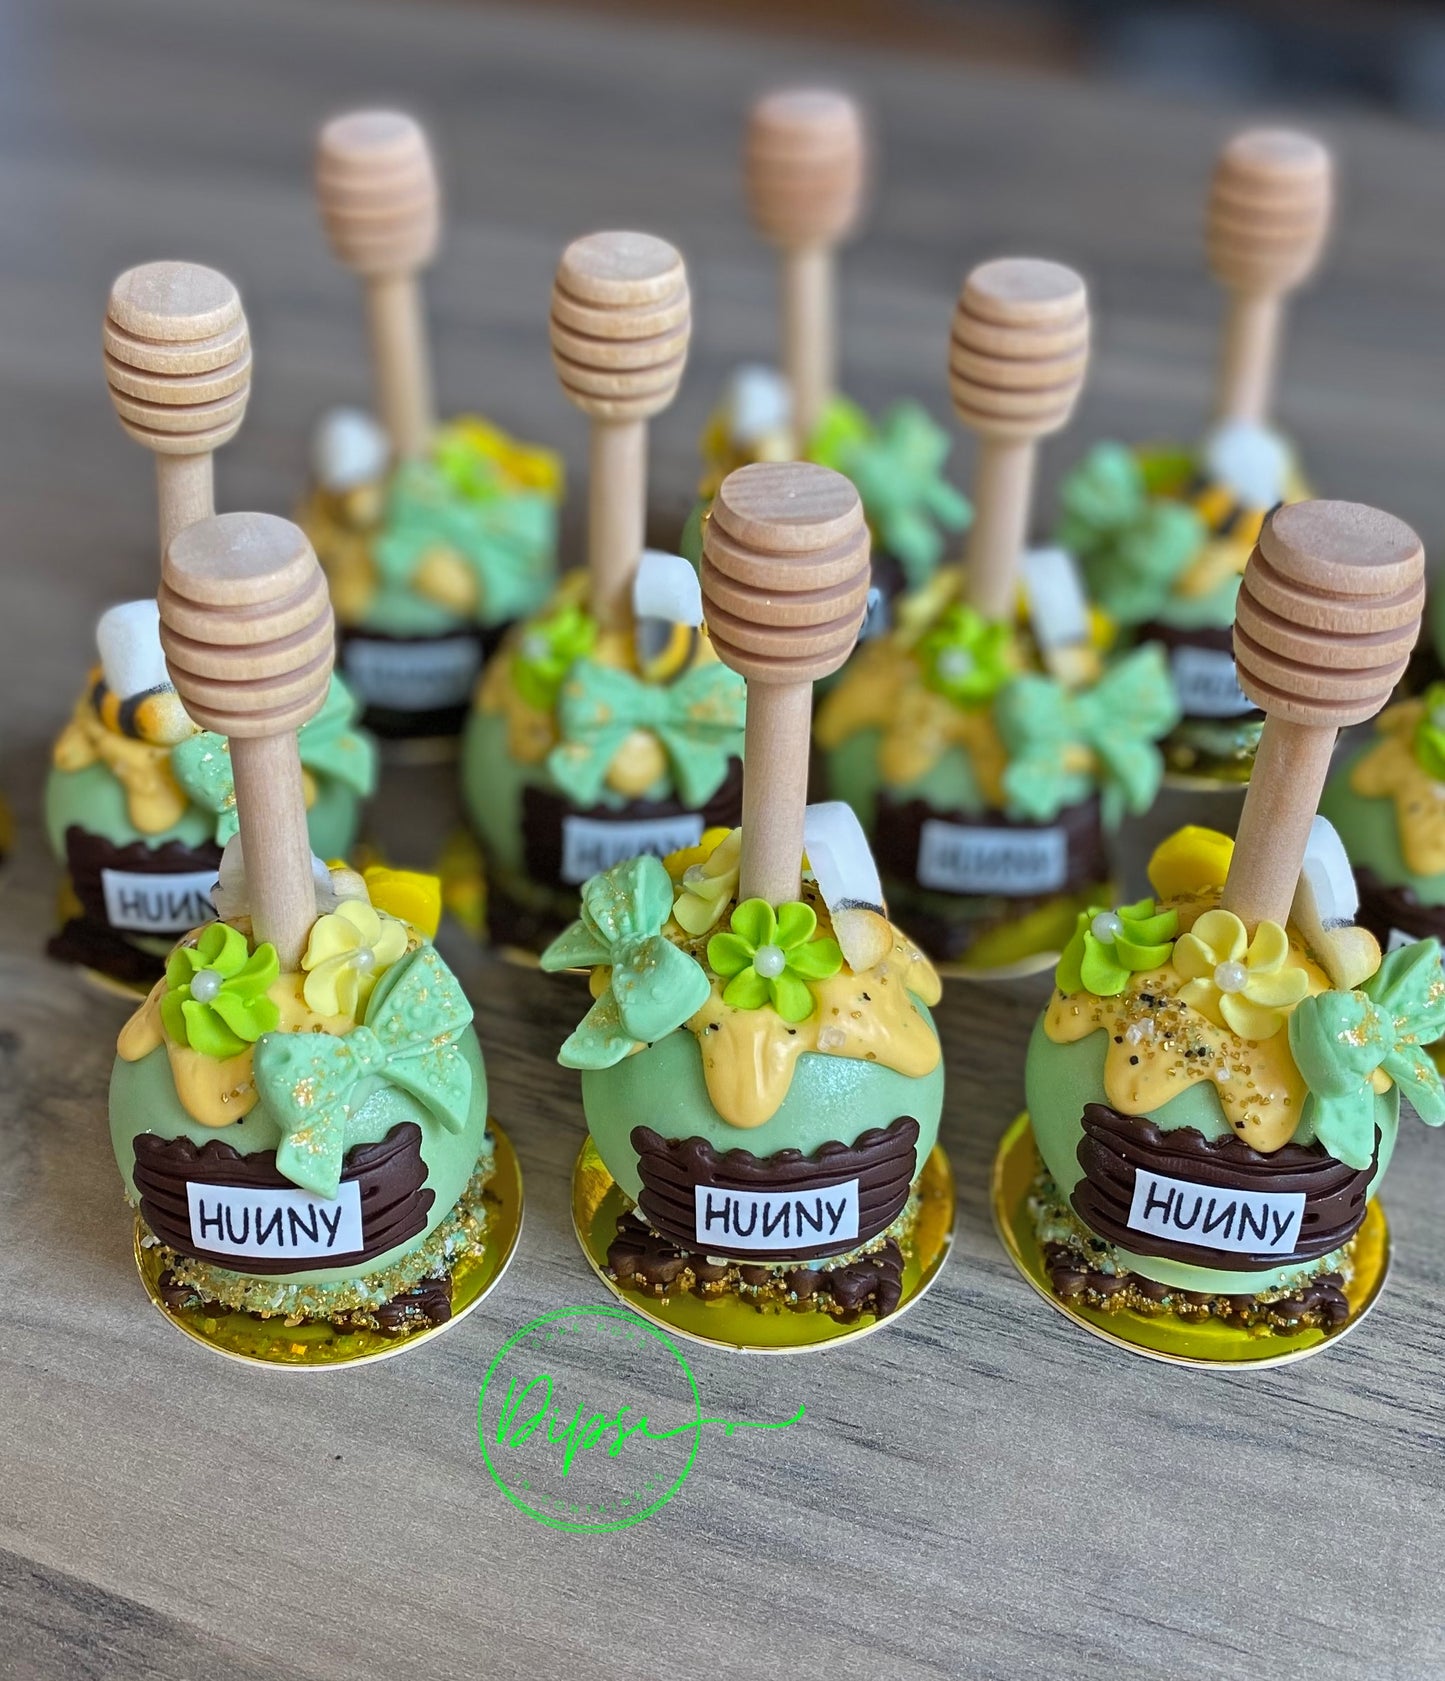 Hunny Pot cake pops, Baby shower pooh inspired